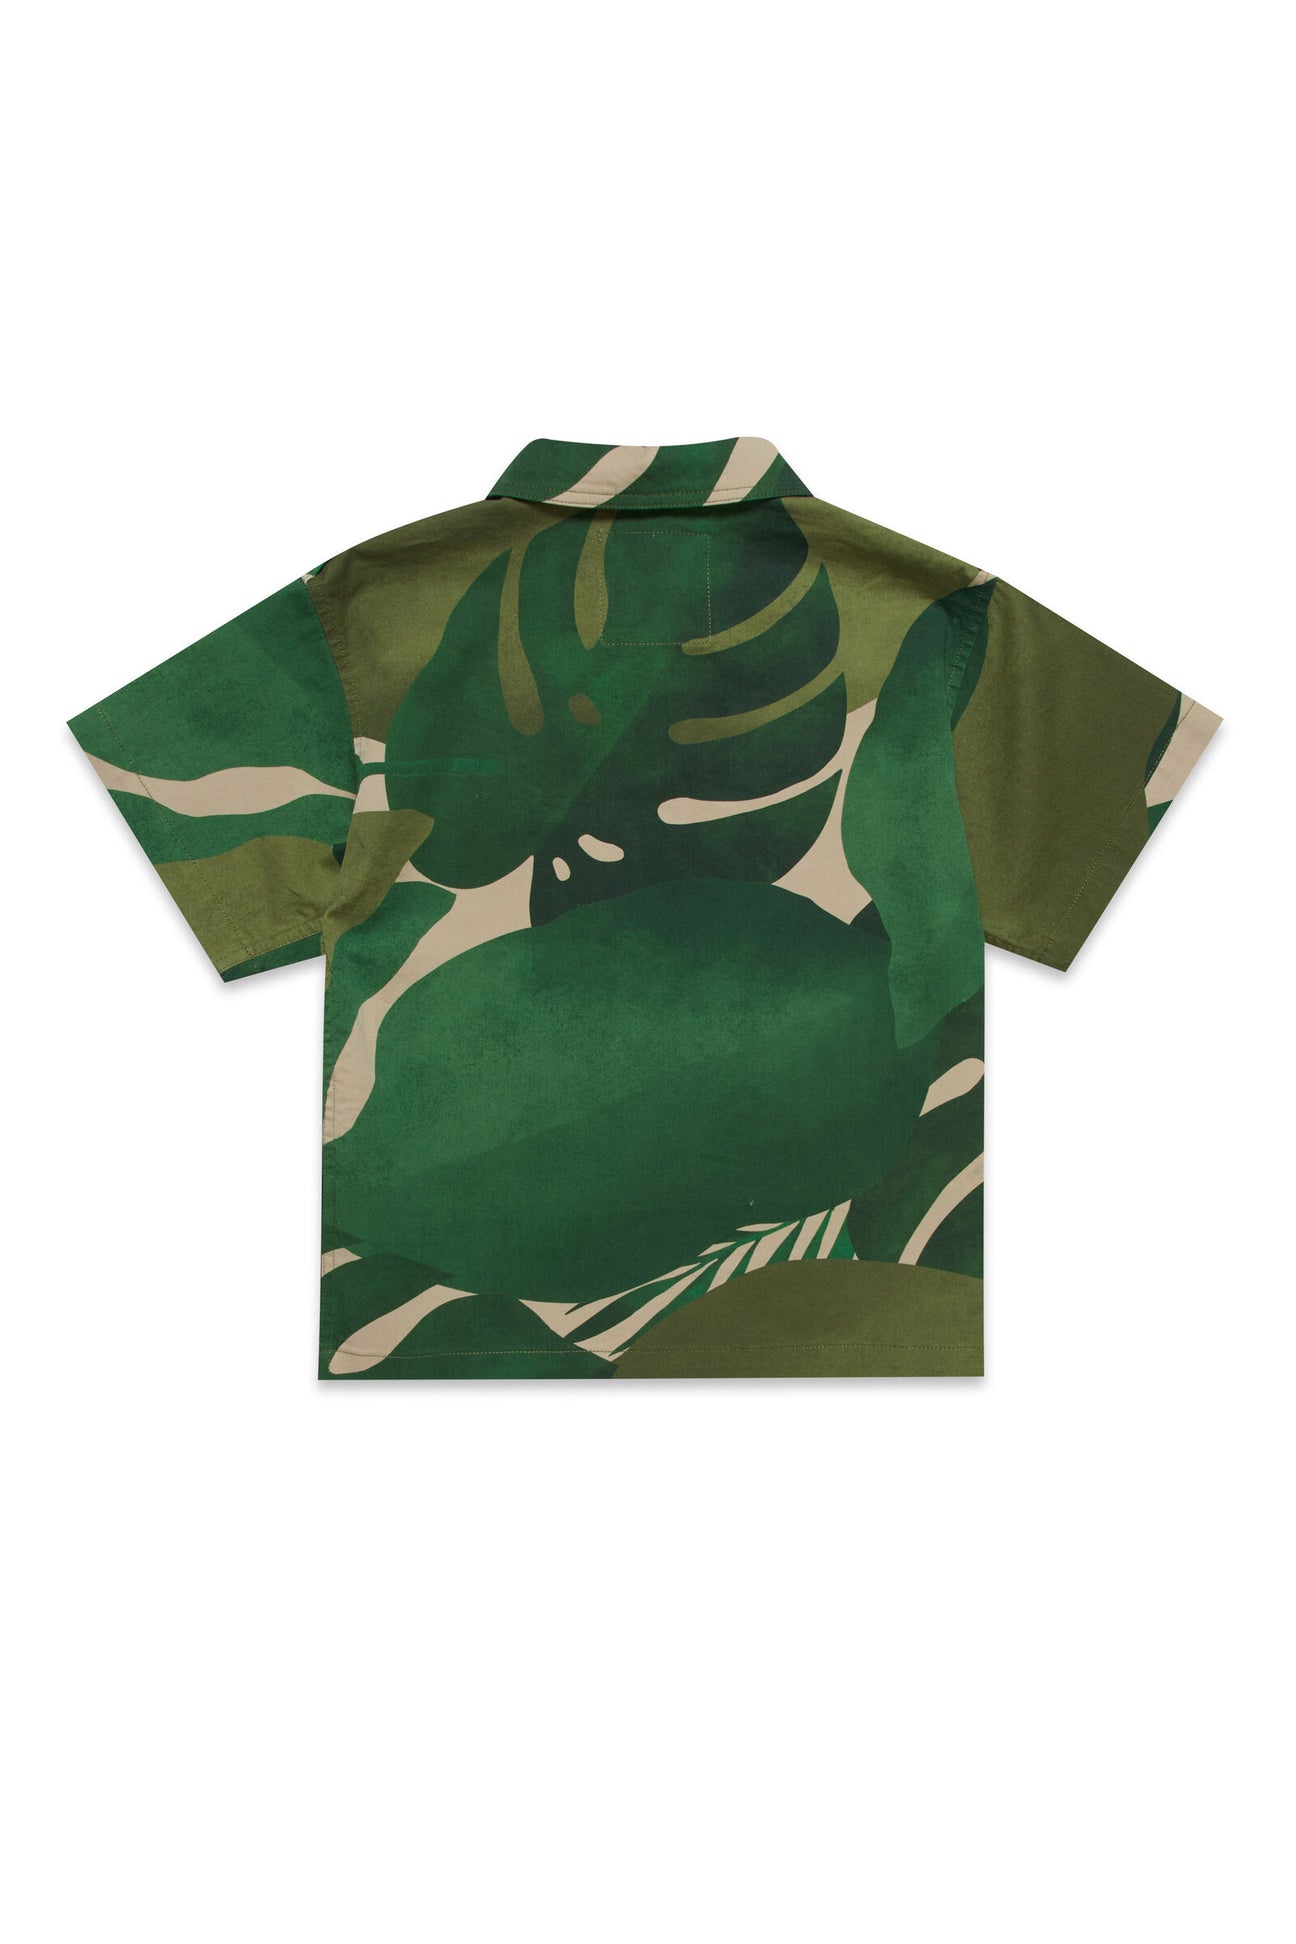 Deadstock rainforest patterned fabric shirt Deadstock rainforest patterned fabric shirt